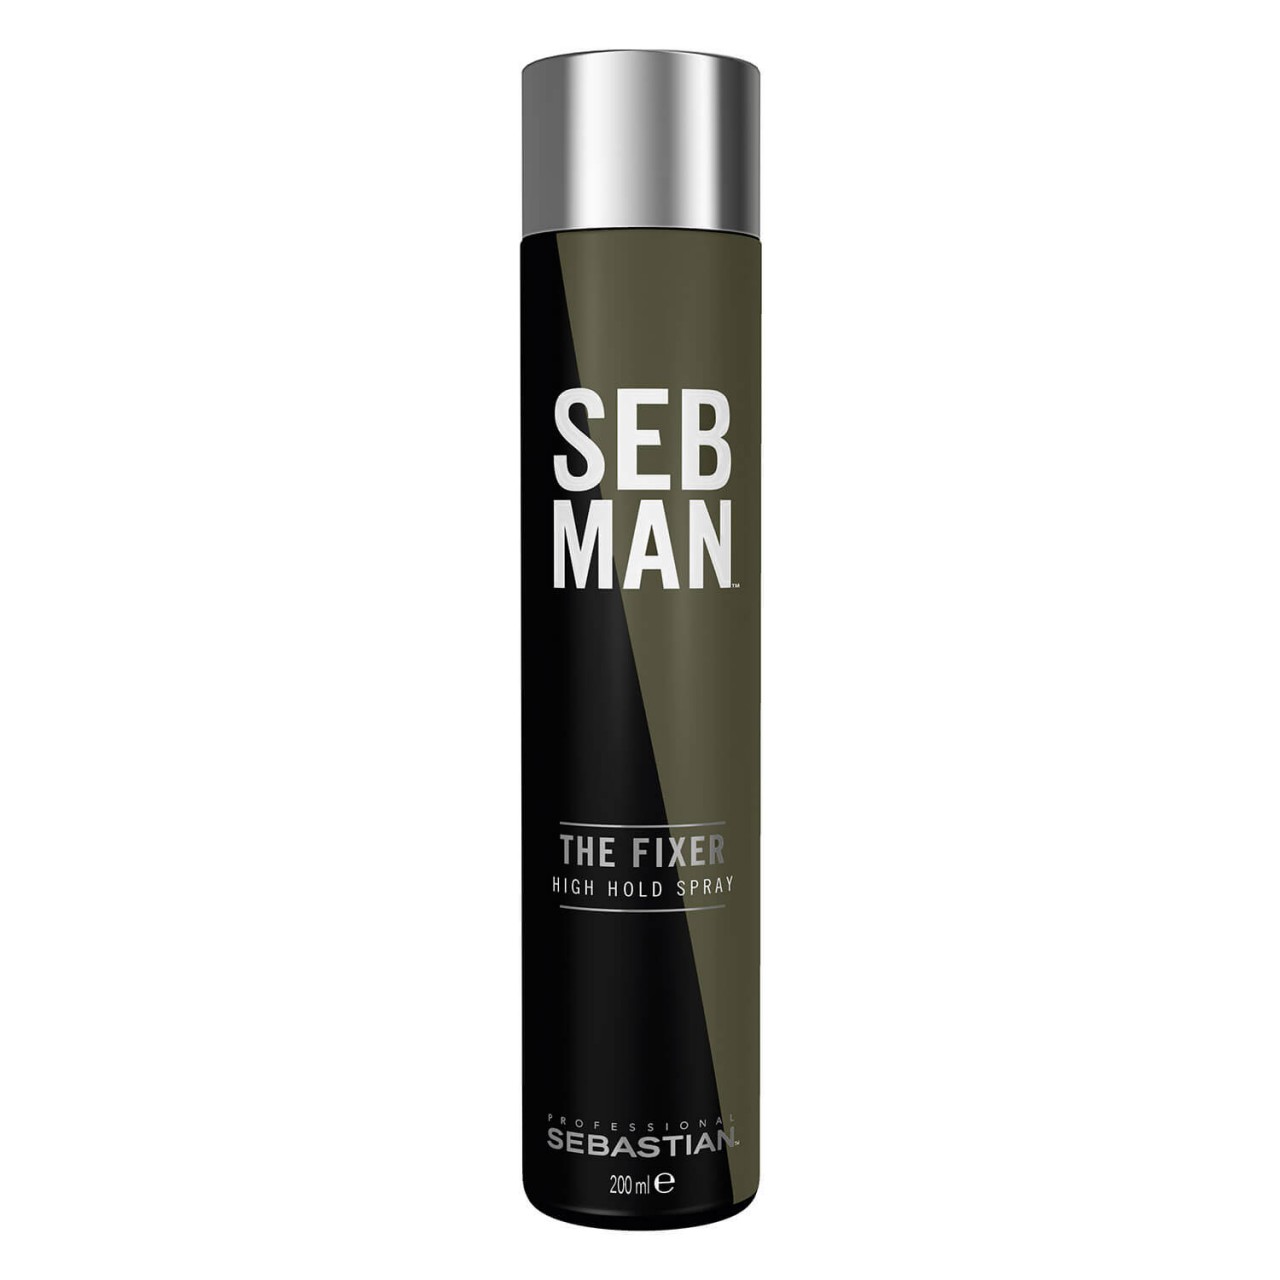 SEB MAN - The Fixer High Hold Spray von Sebastian